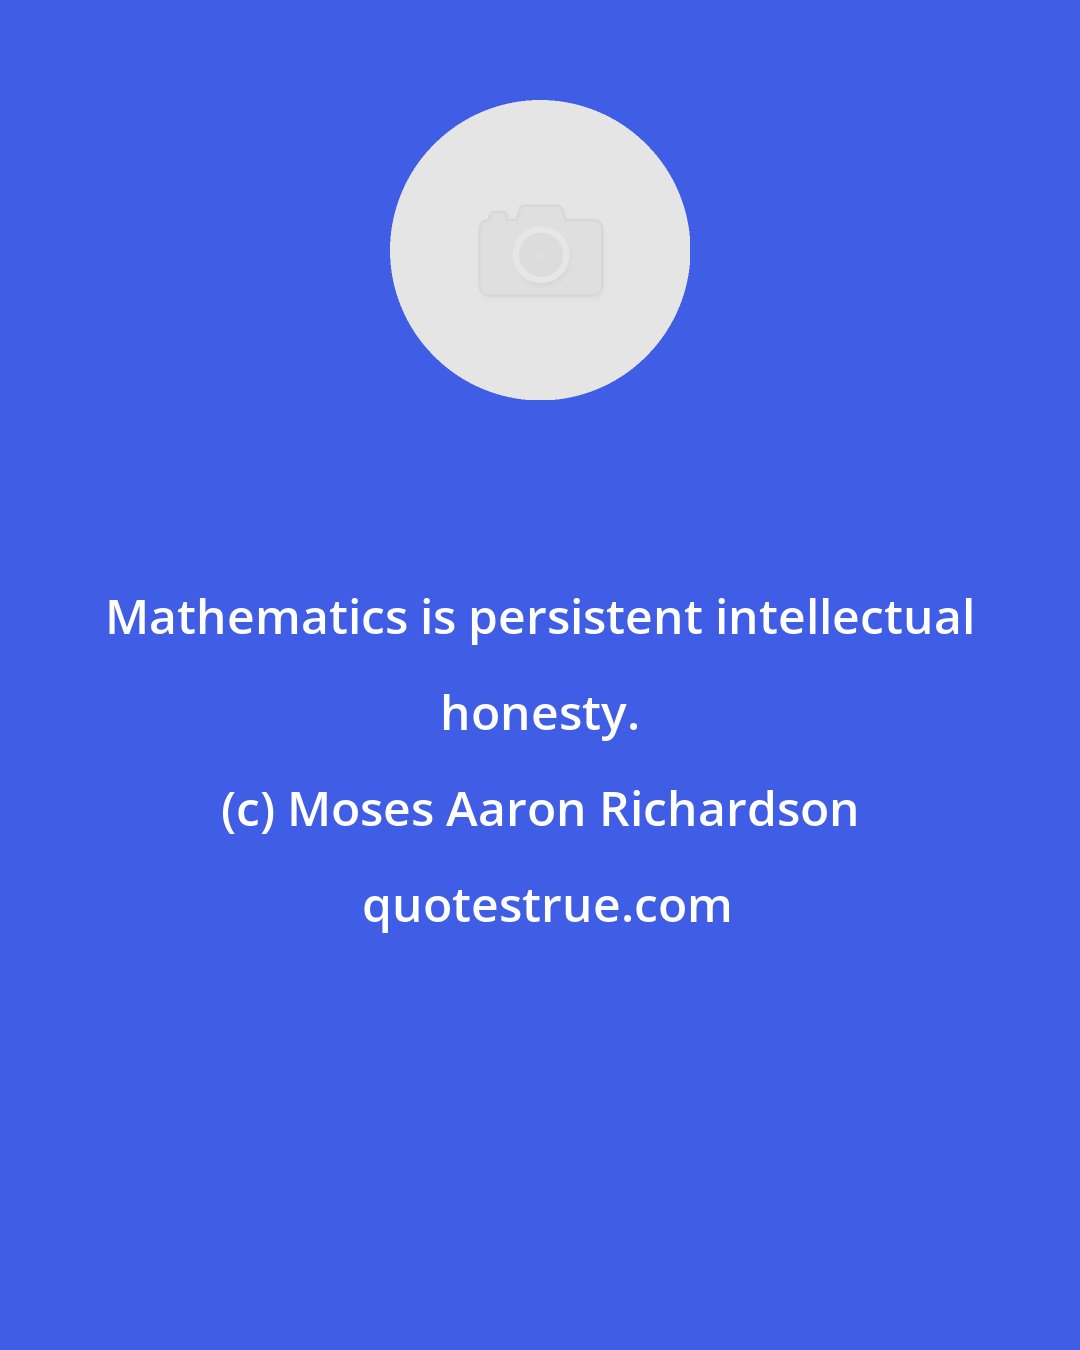 Moses Aaron Richardson: Mathematics is persistent intellectual honesty.